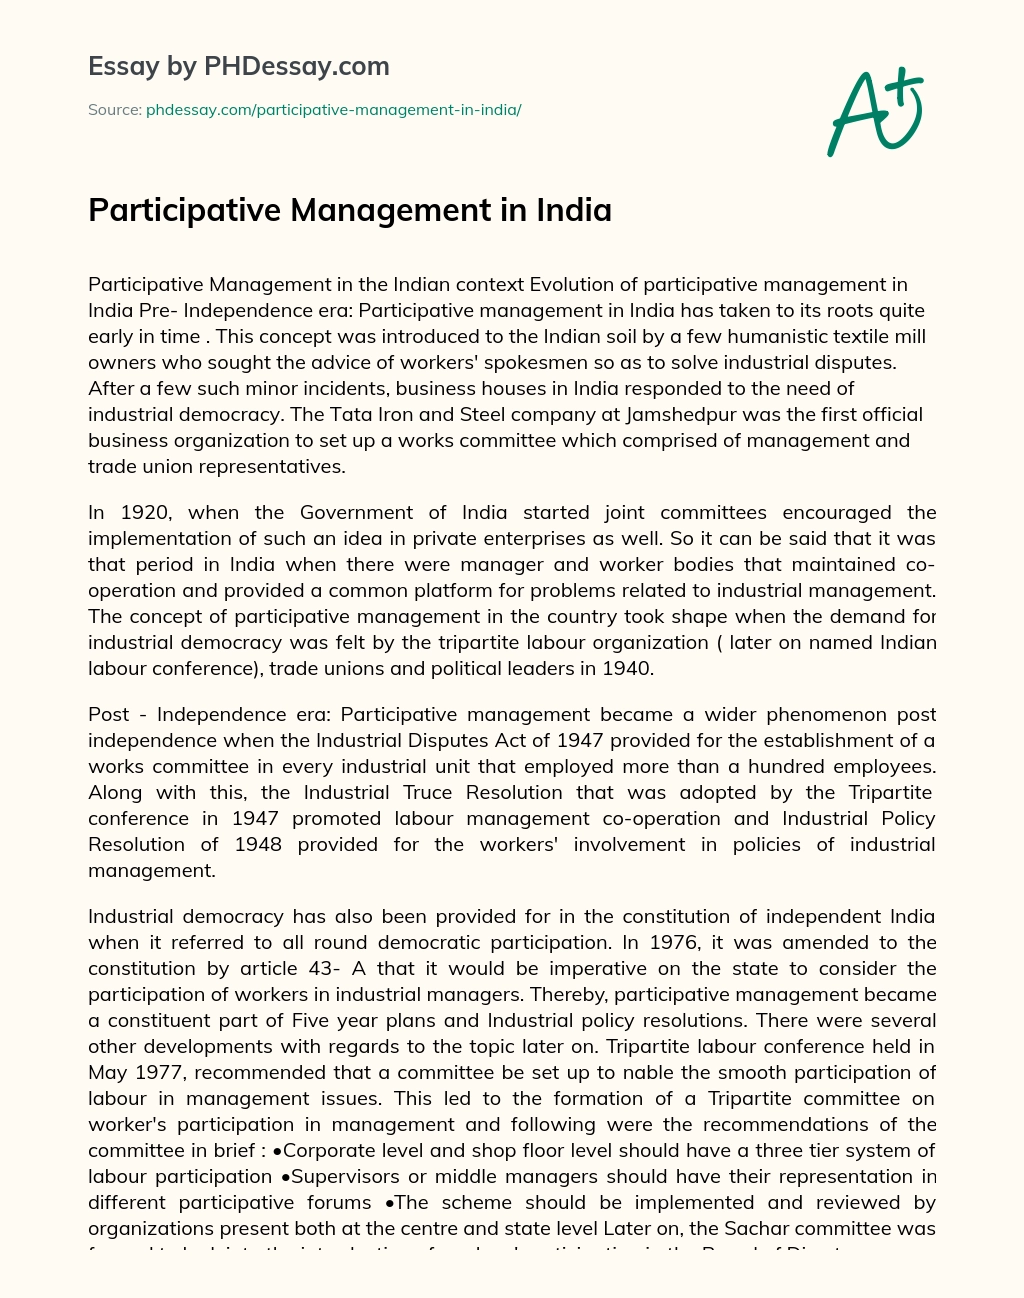 Participative Management in India essay